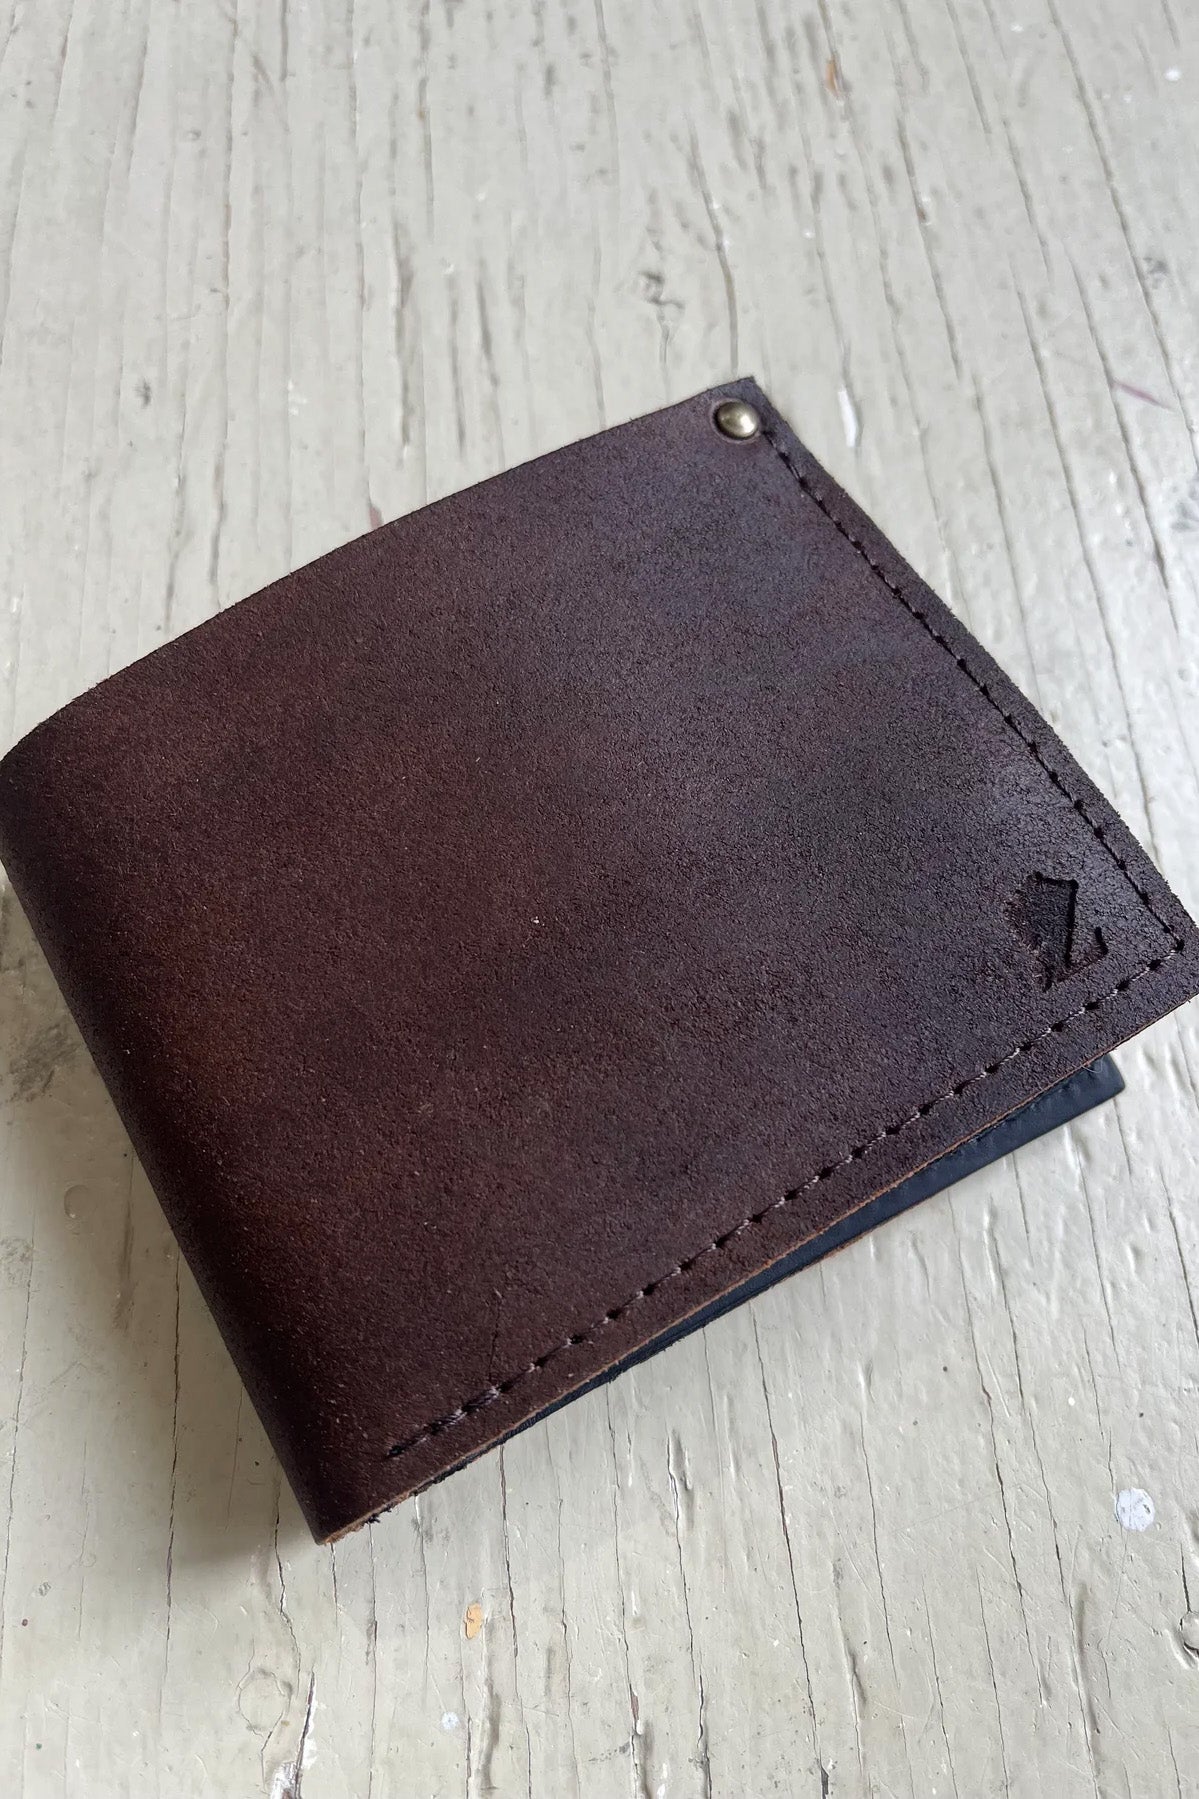 Wallet by Kazak, Brown and Black